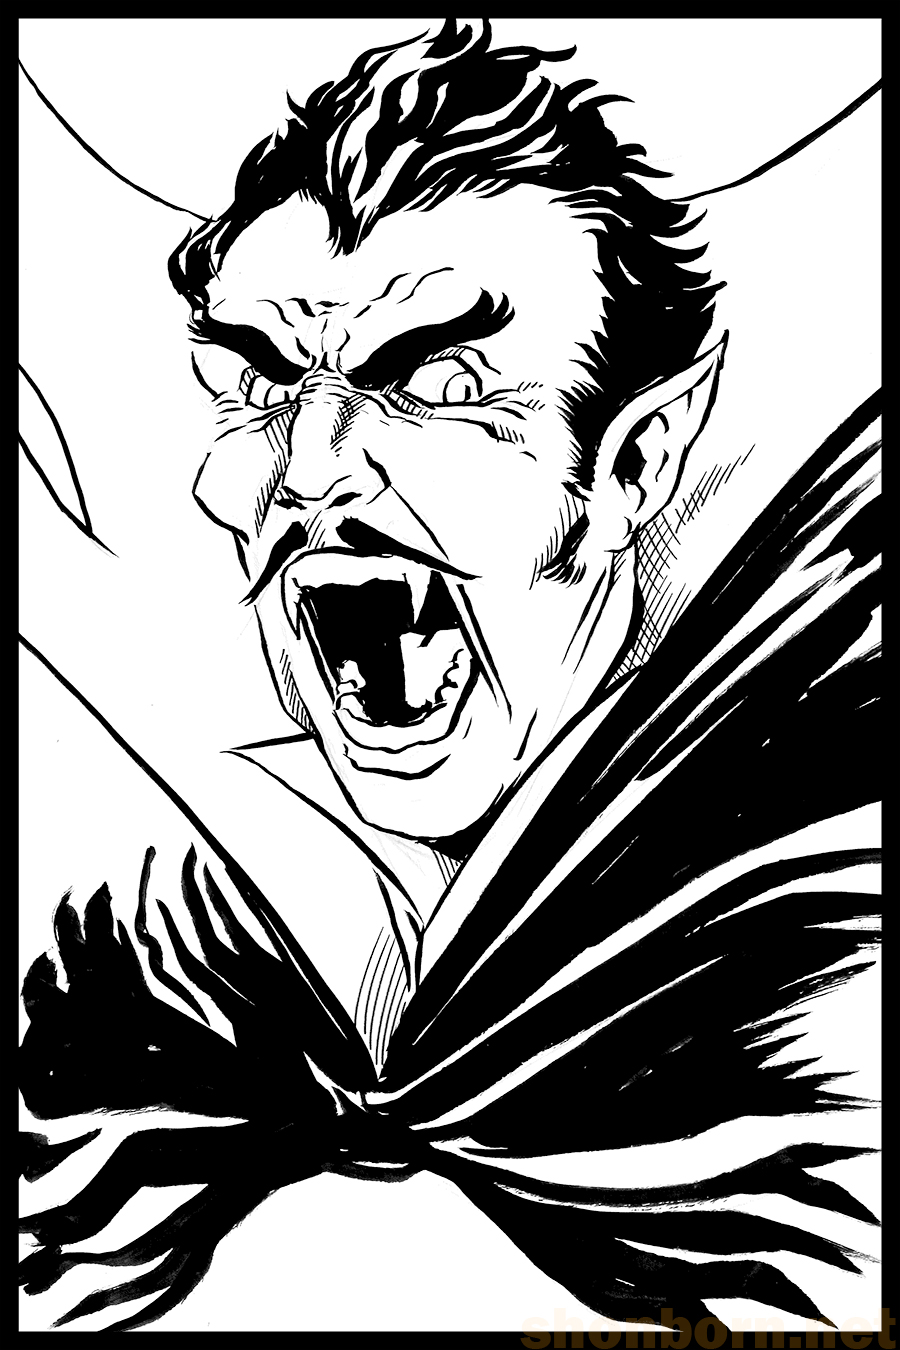 8. Count Dracula